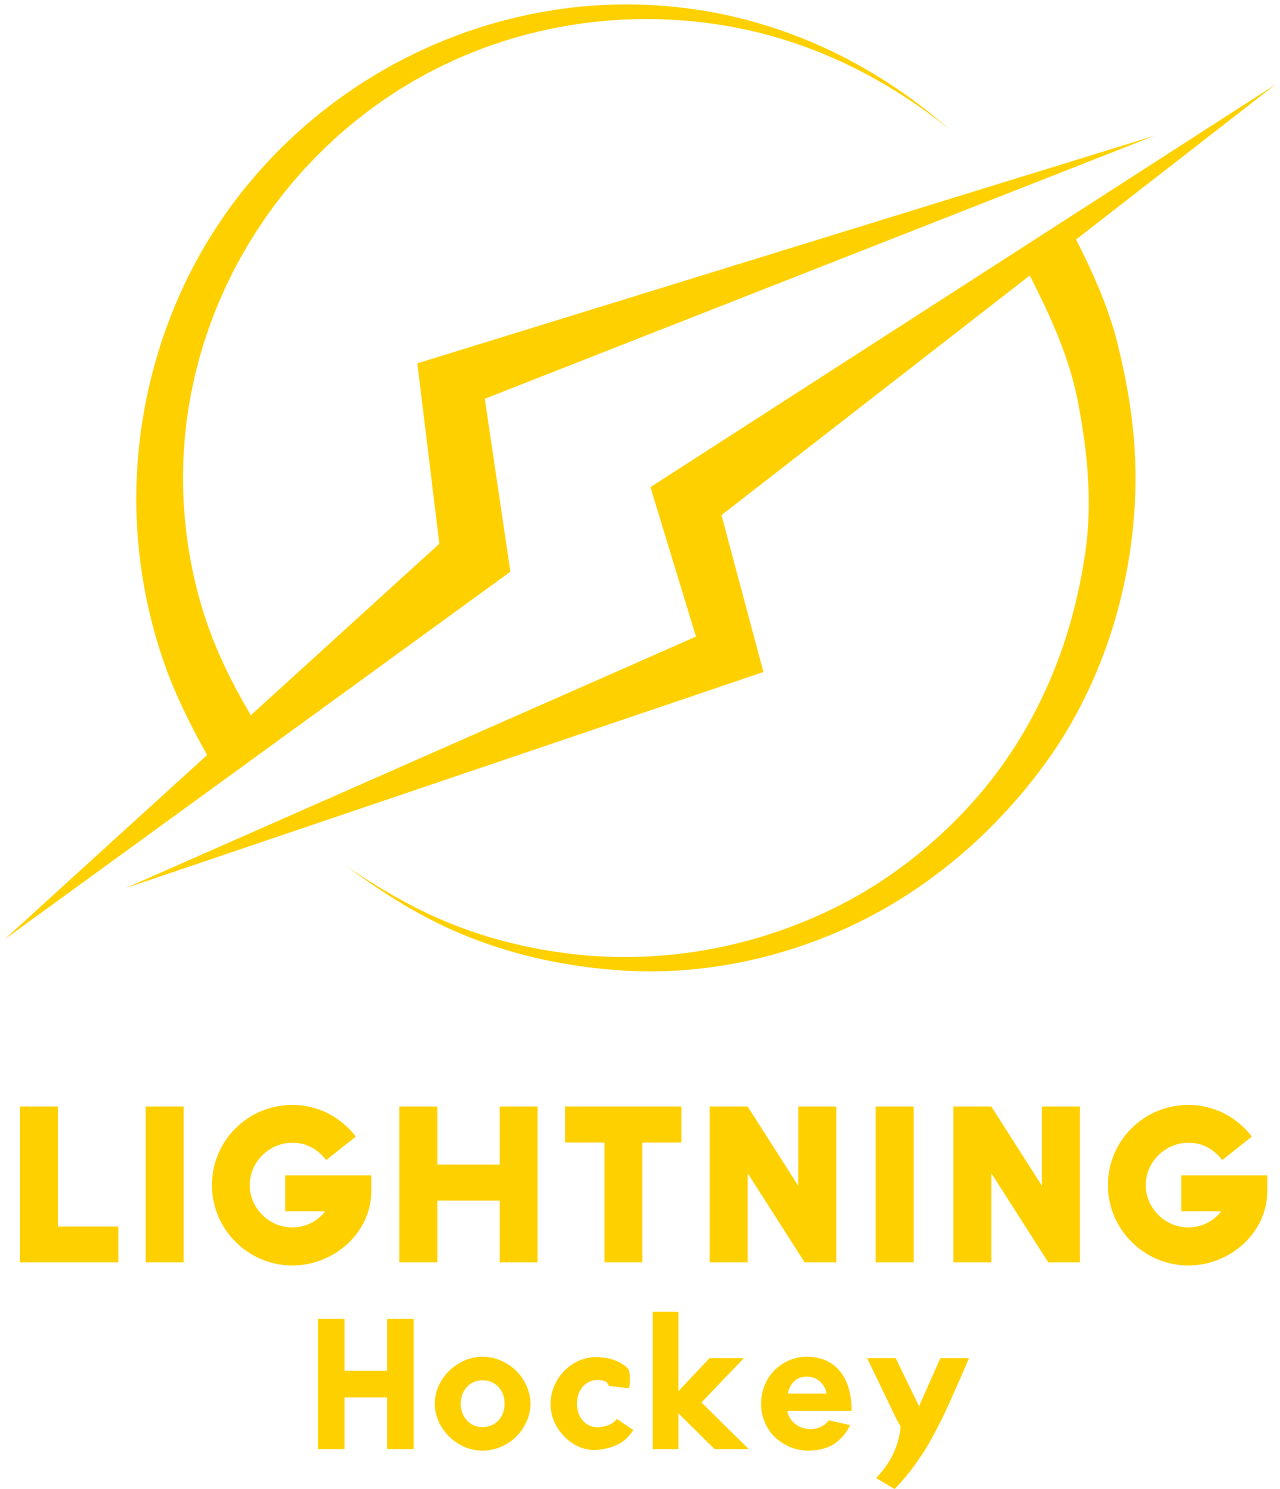 Lightning's logo